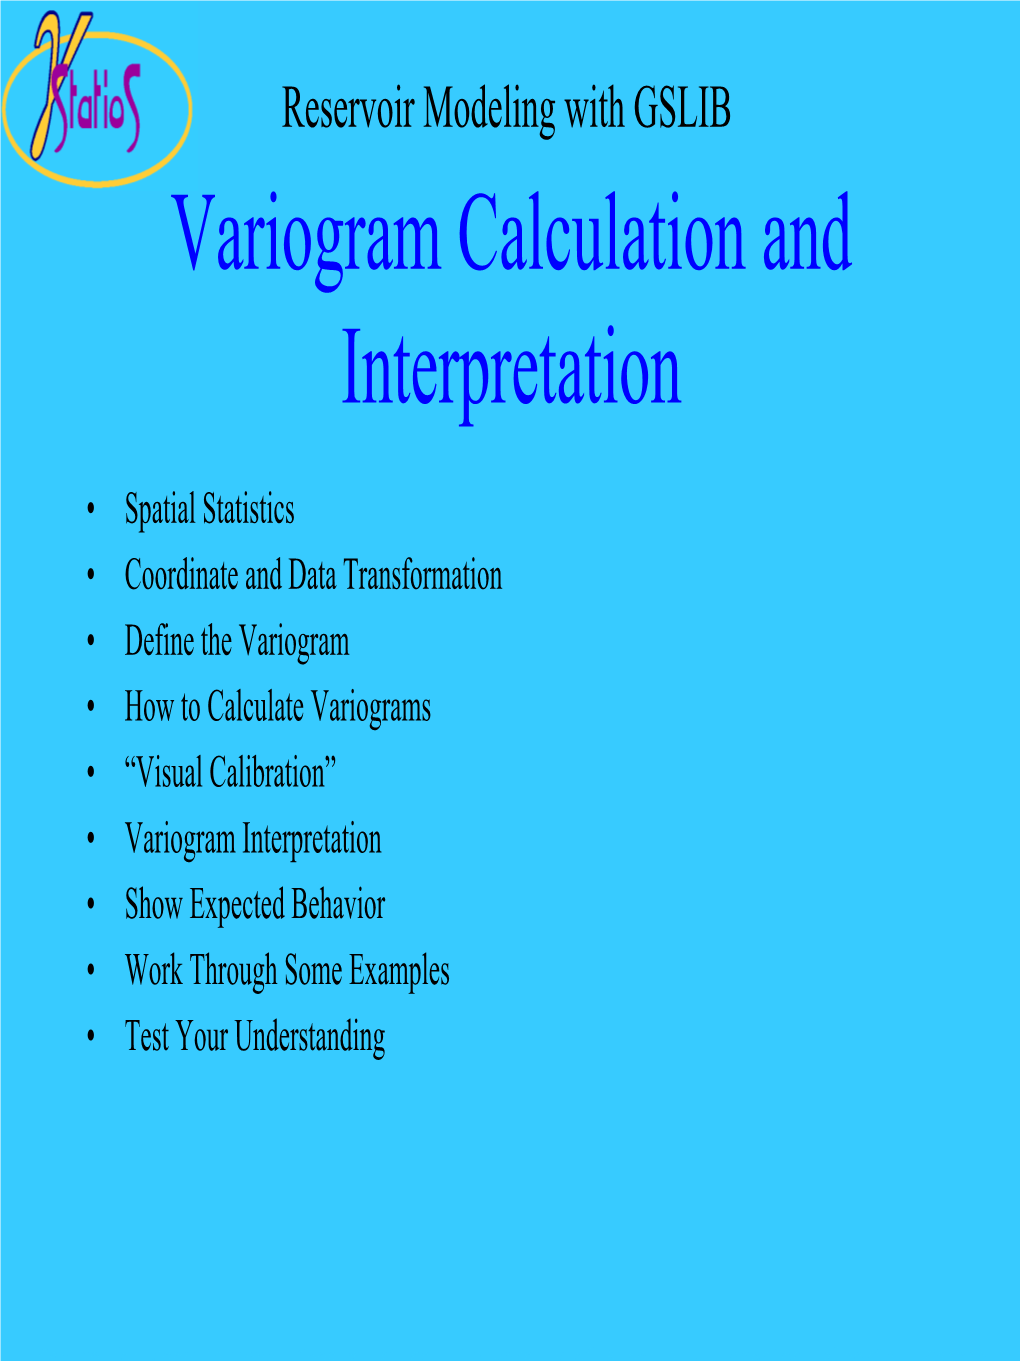 Variogram Calculation and Interpretation